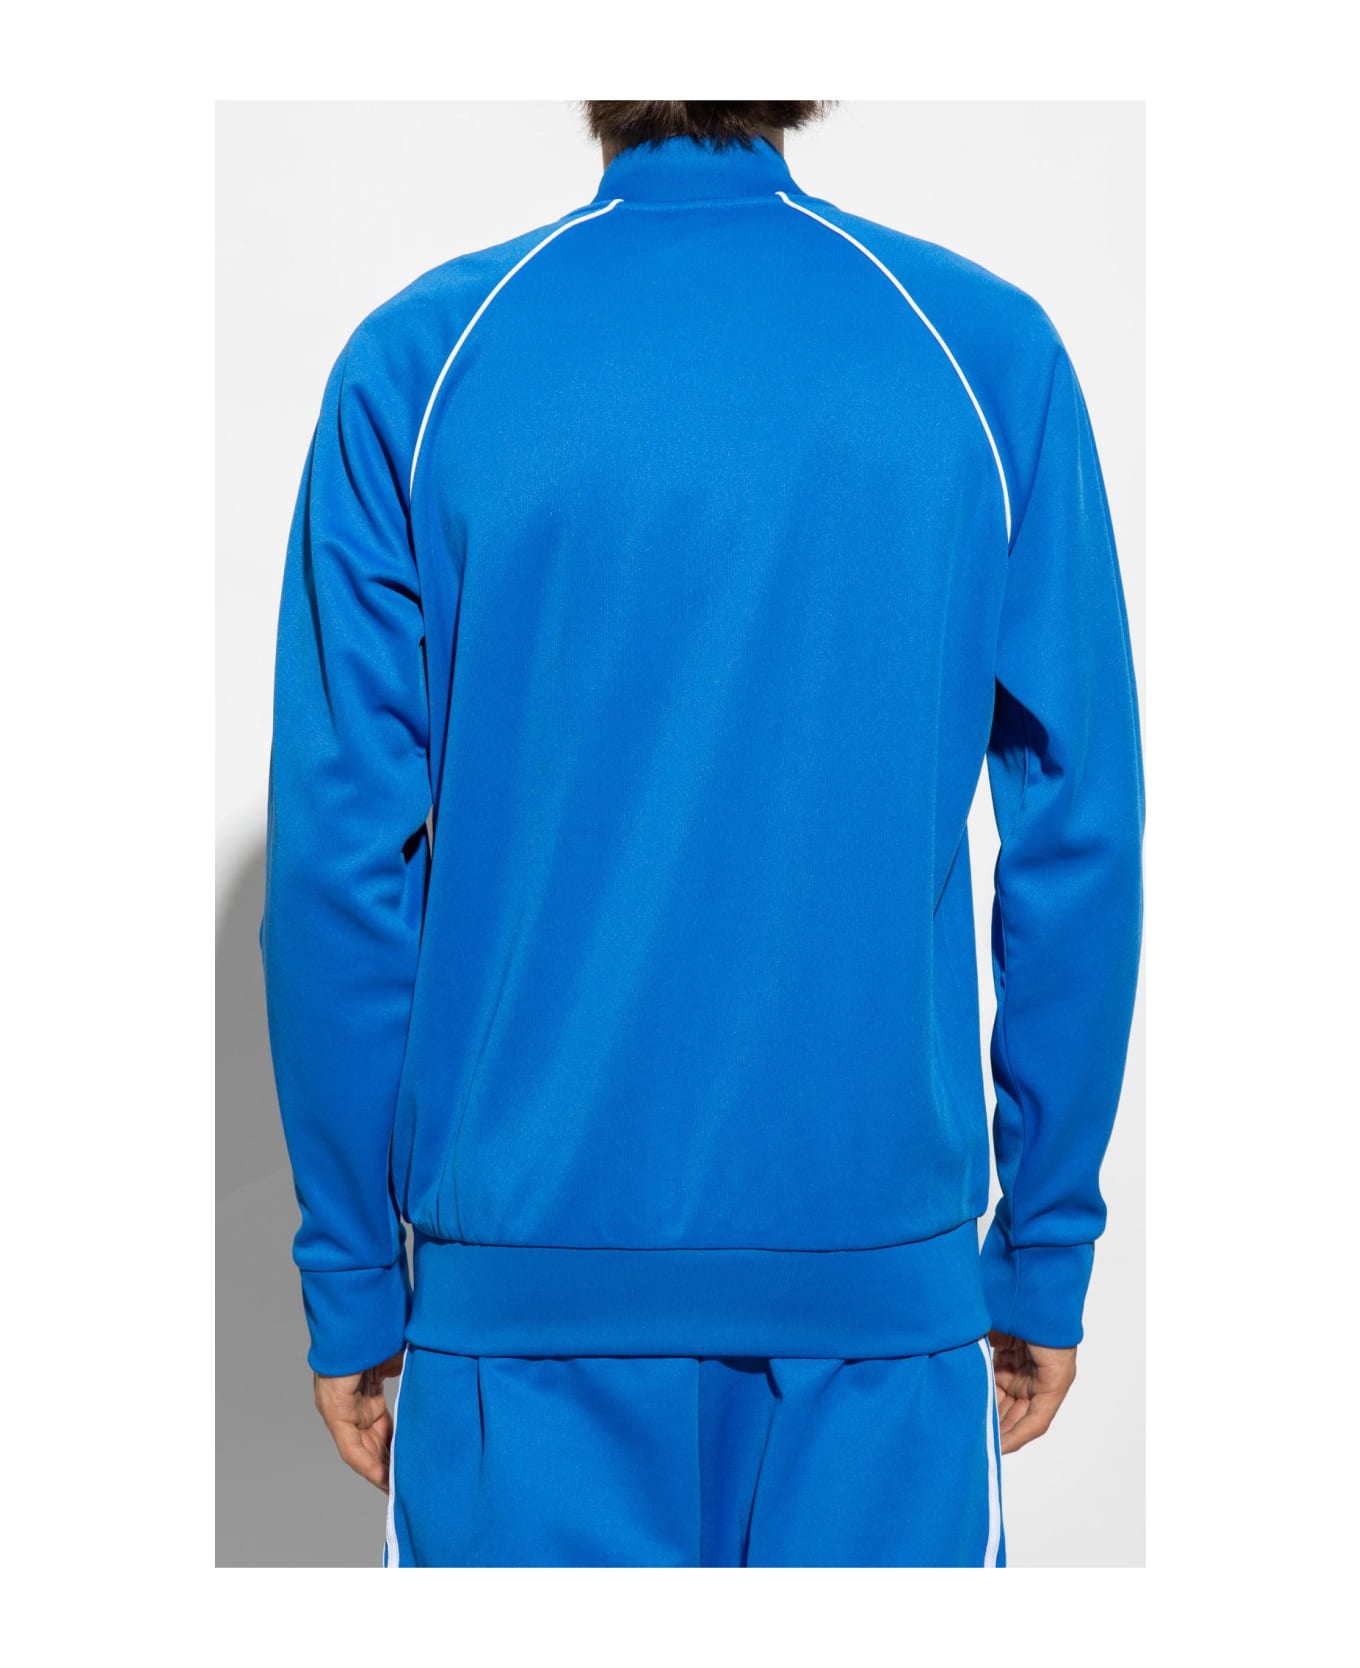 Adidas Originals Sweatshirt With Logo - Gnawed Blue